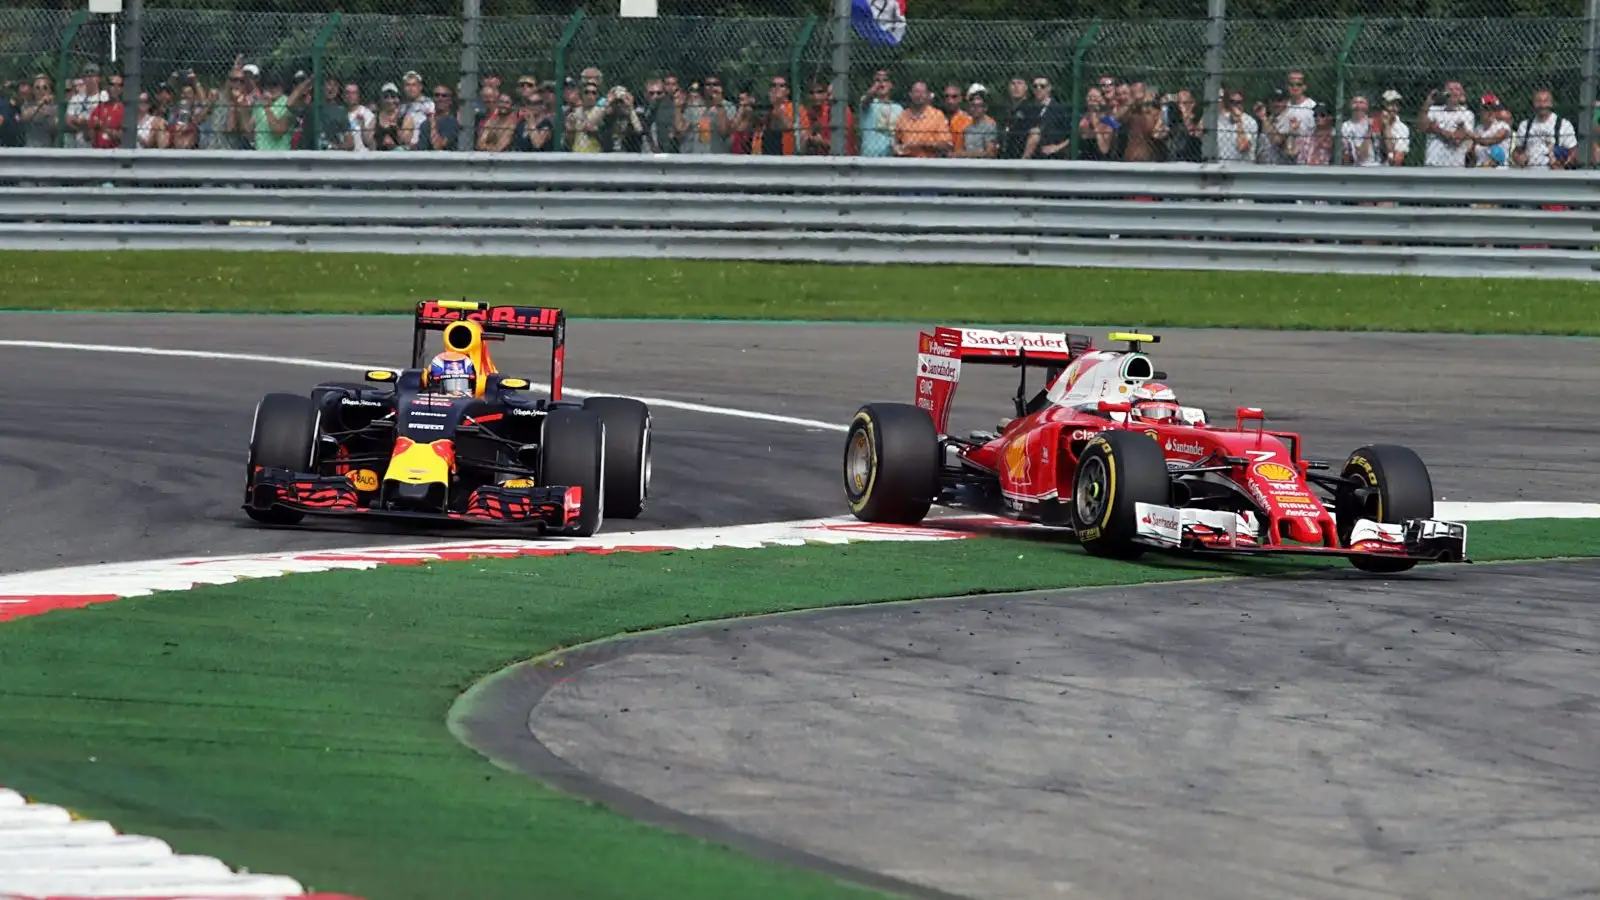 Max Verstappen battles Kimi Raikkonen at the 2016 Belgian GP.